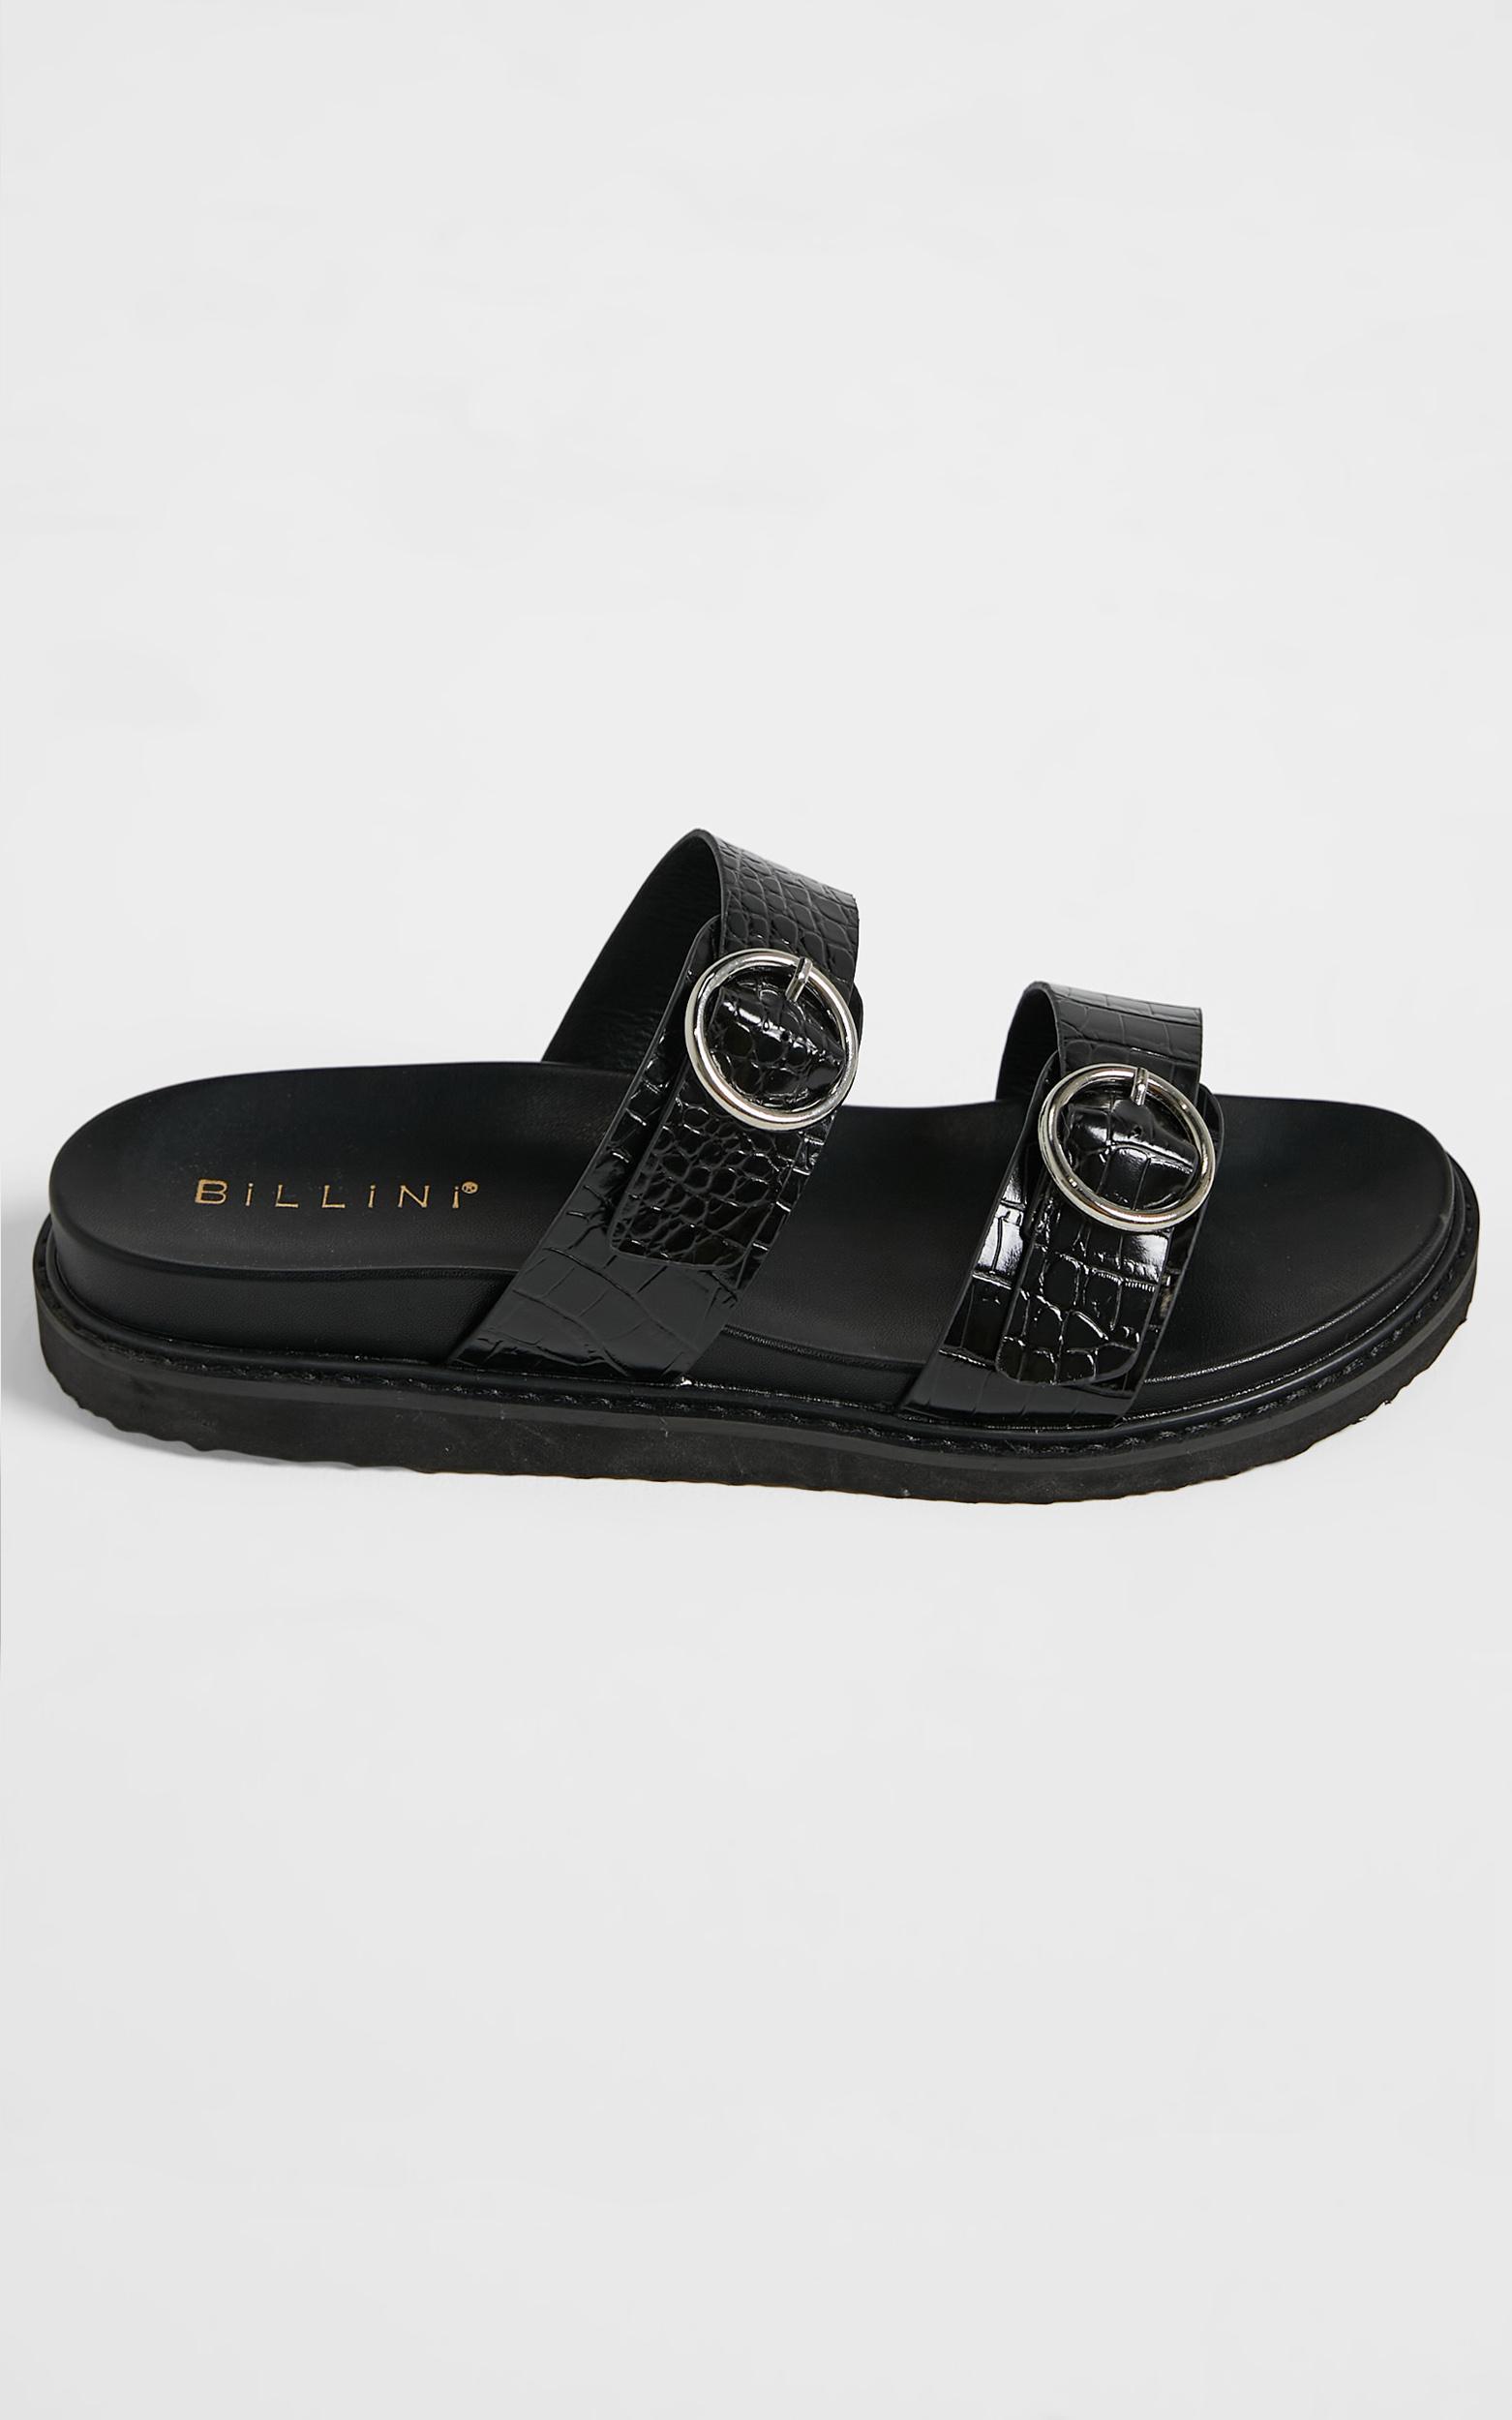 Billini - Ziba Sandals in Black - 05, BLK1, hi-res image number null